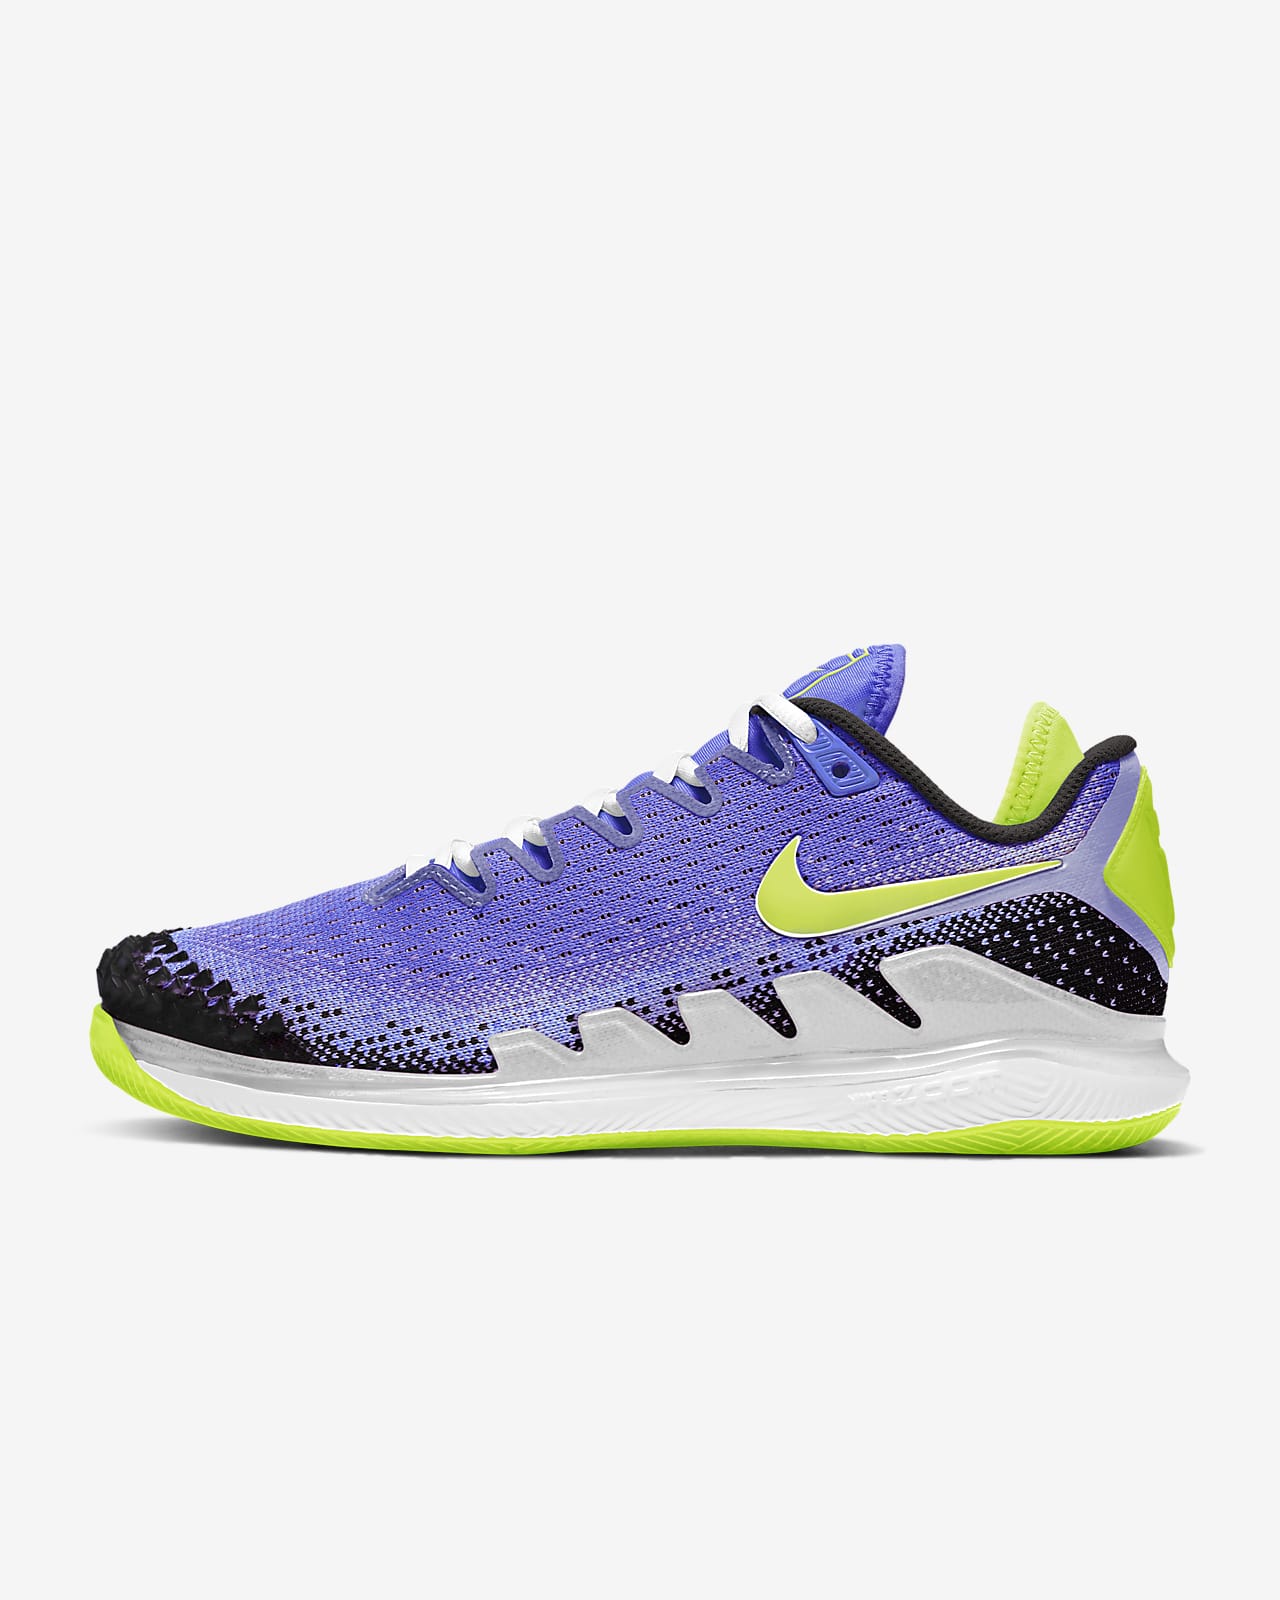 NikeCourt Air Zoom Vapor X Knit Women's Hard Court Tennis Shoes